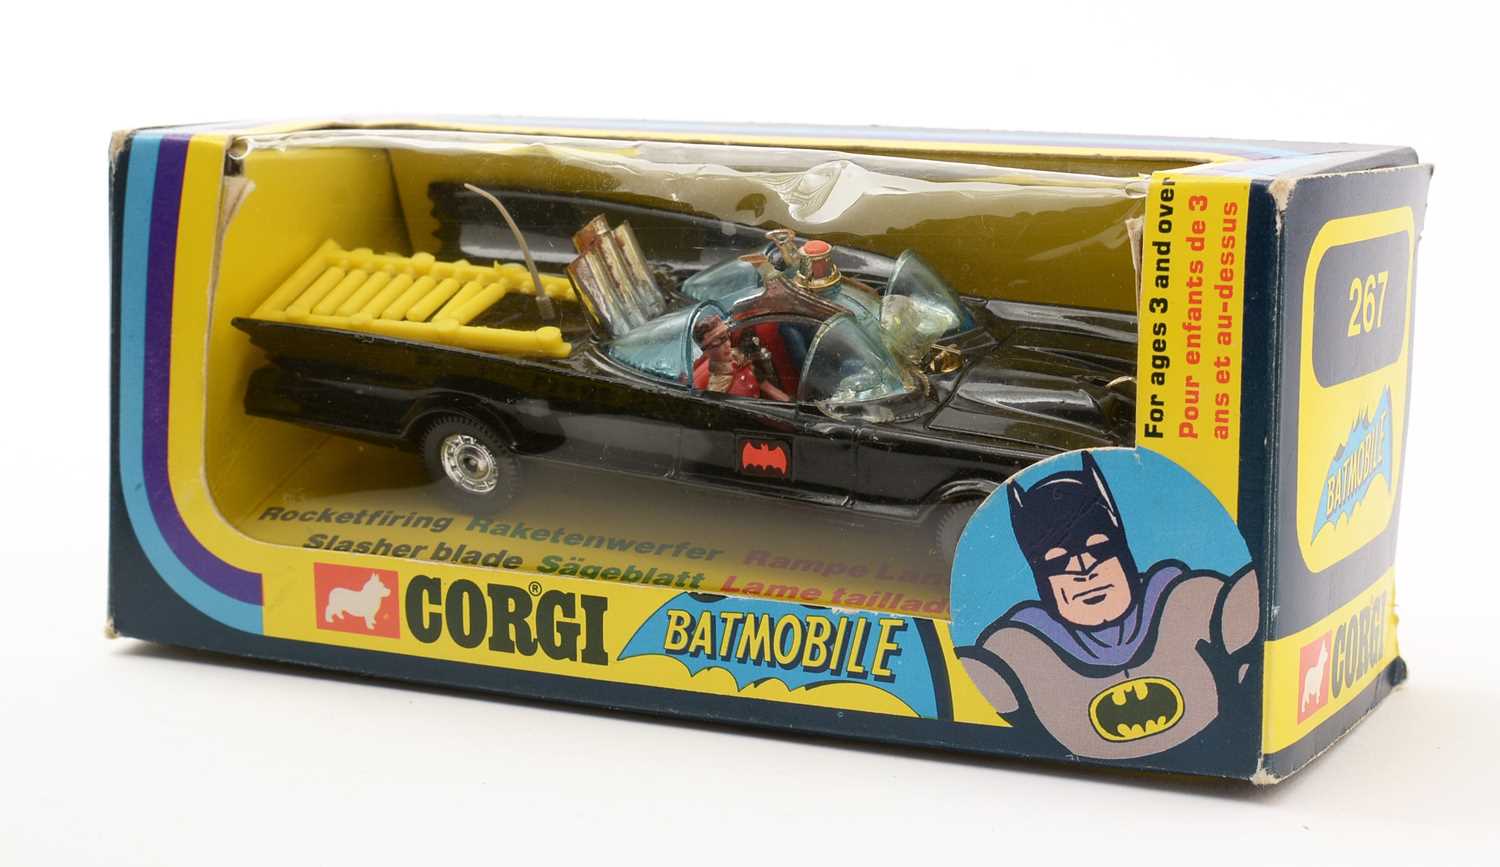 Corgi Batmobile, 267,